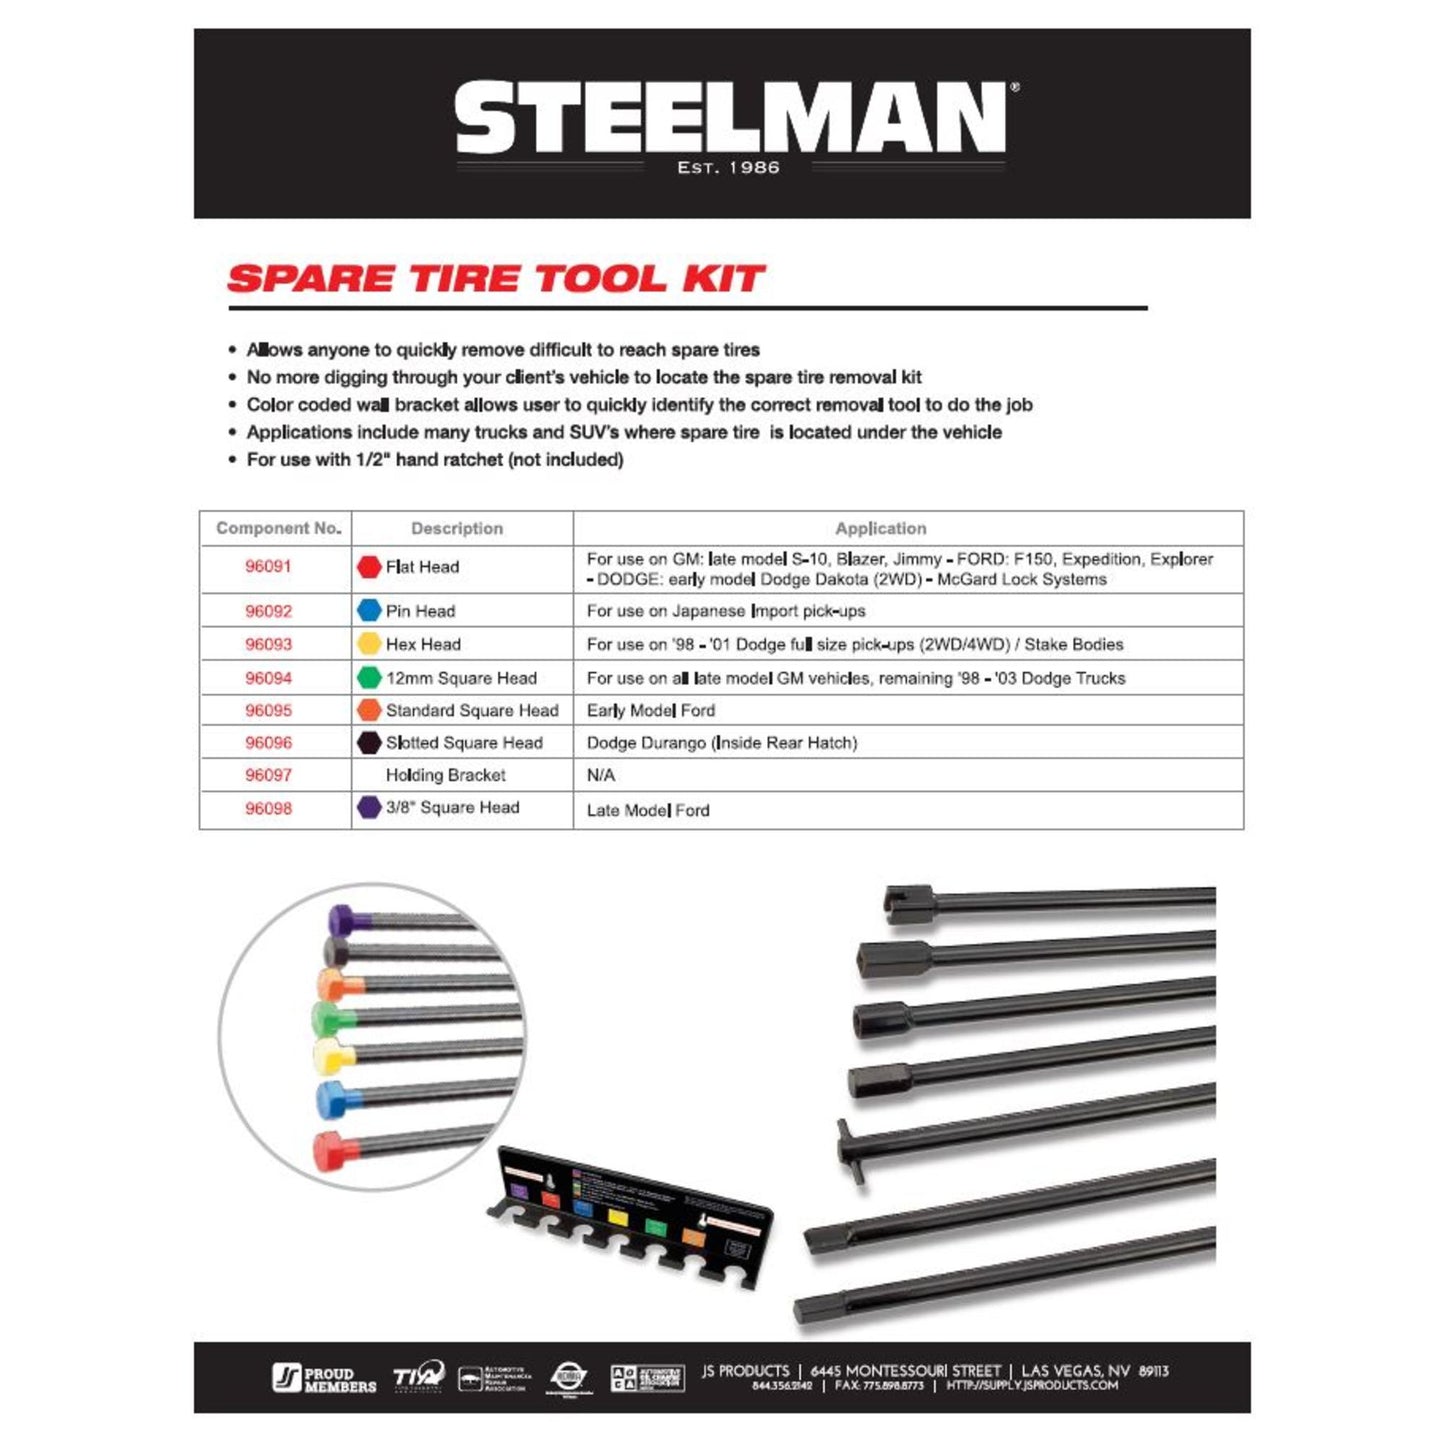 7-Piece Spare Tire Retrieval Tool Kit for Mechanics